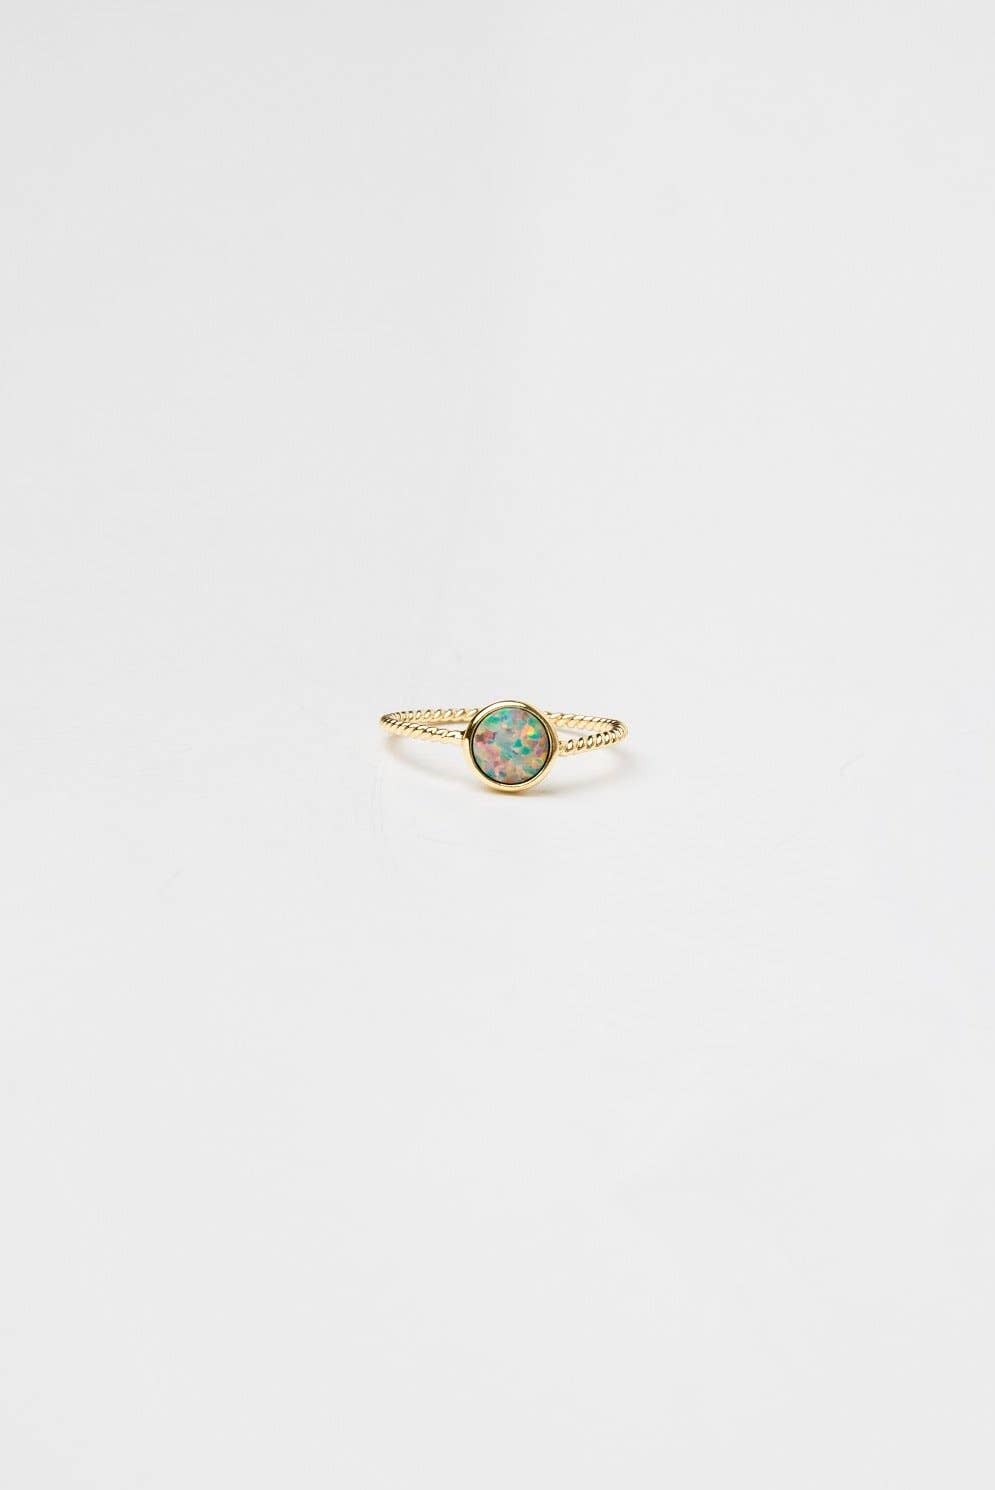 Brenda Grands Jewelry - Opal Ring